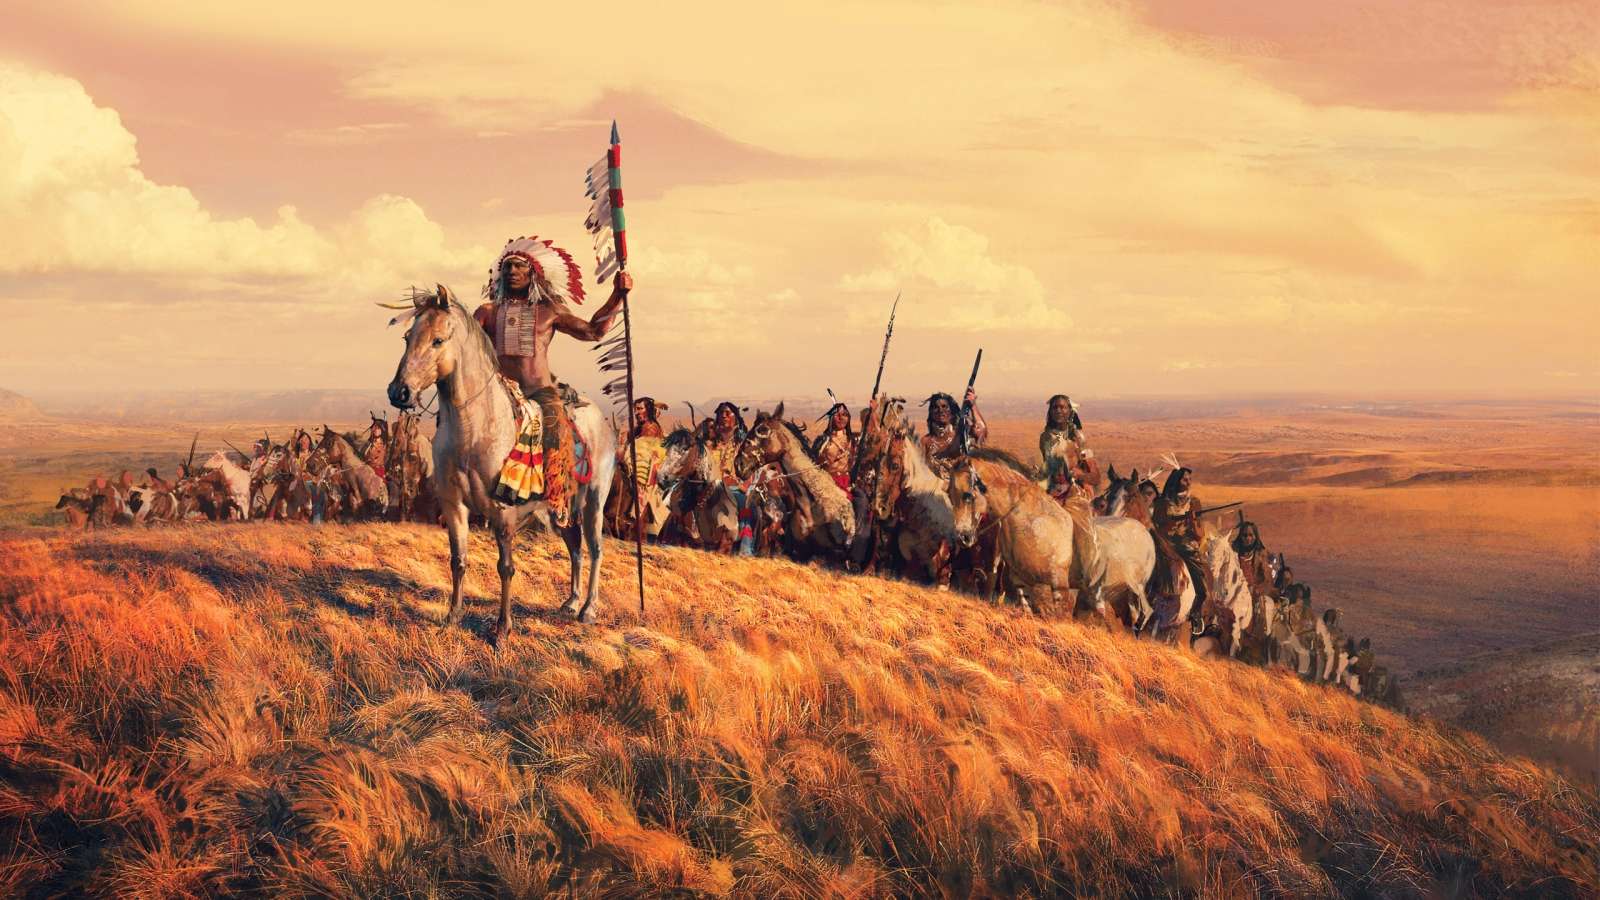 apache warrior wallpaper